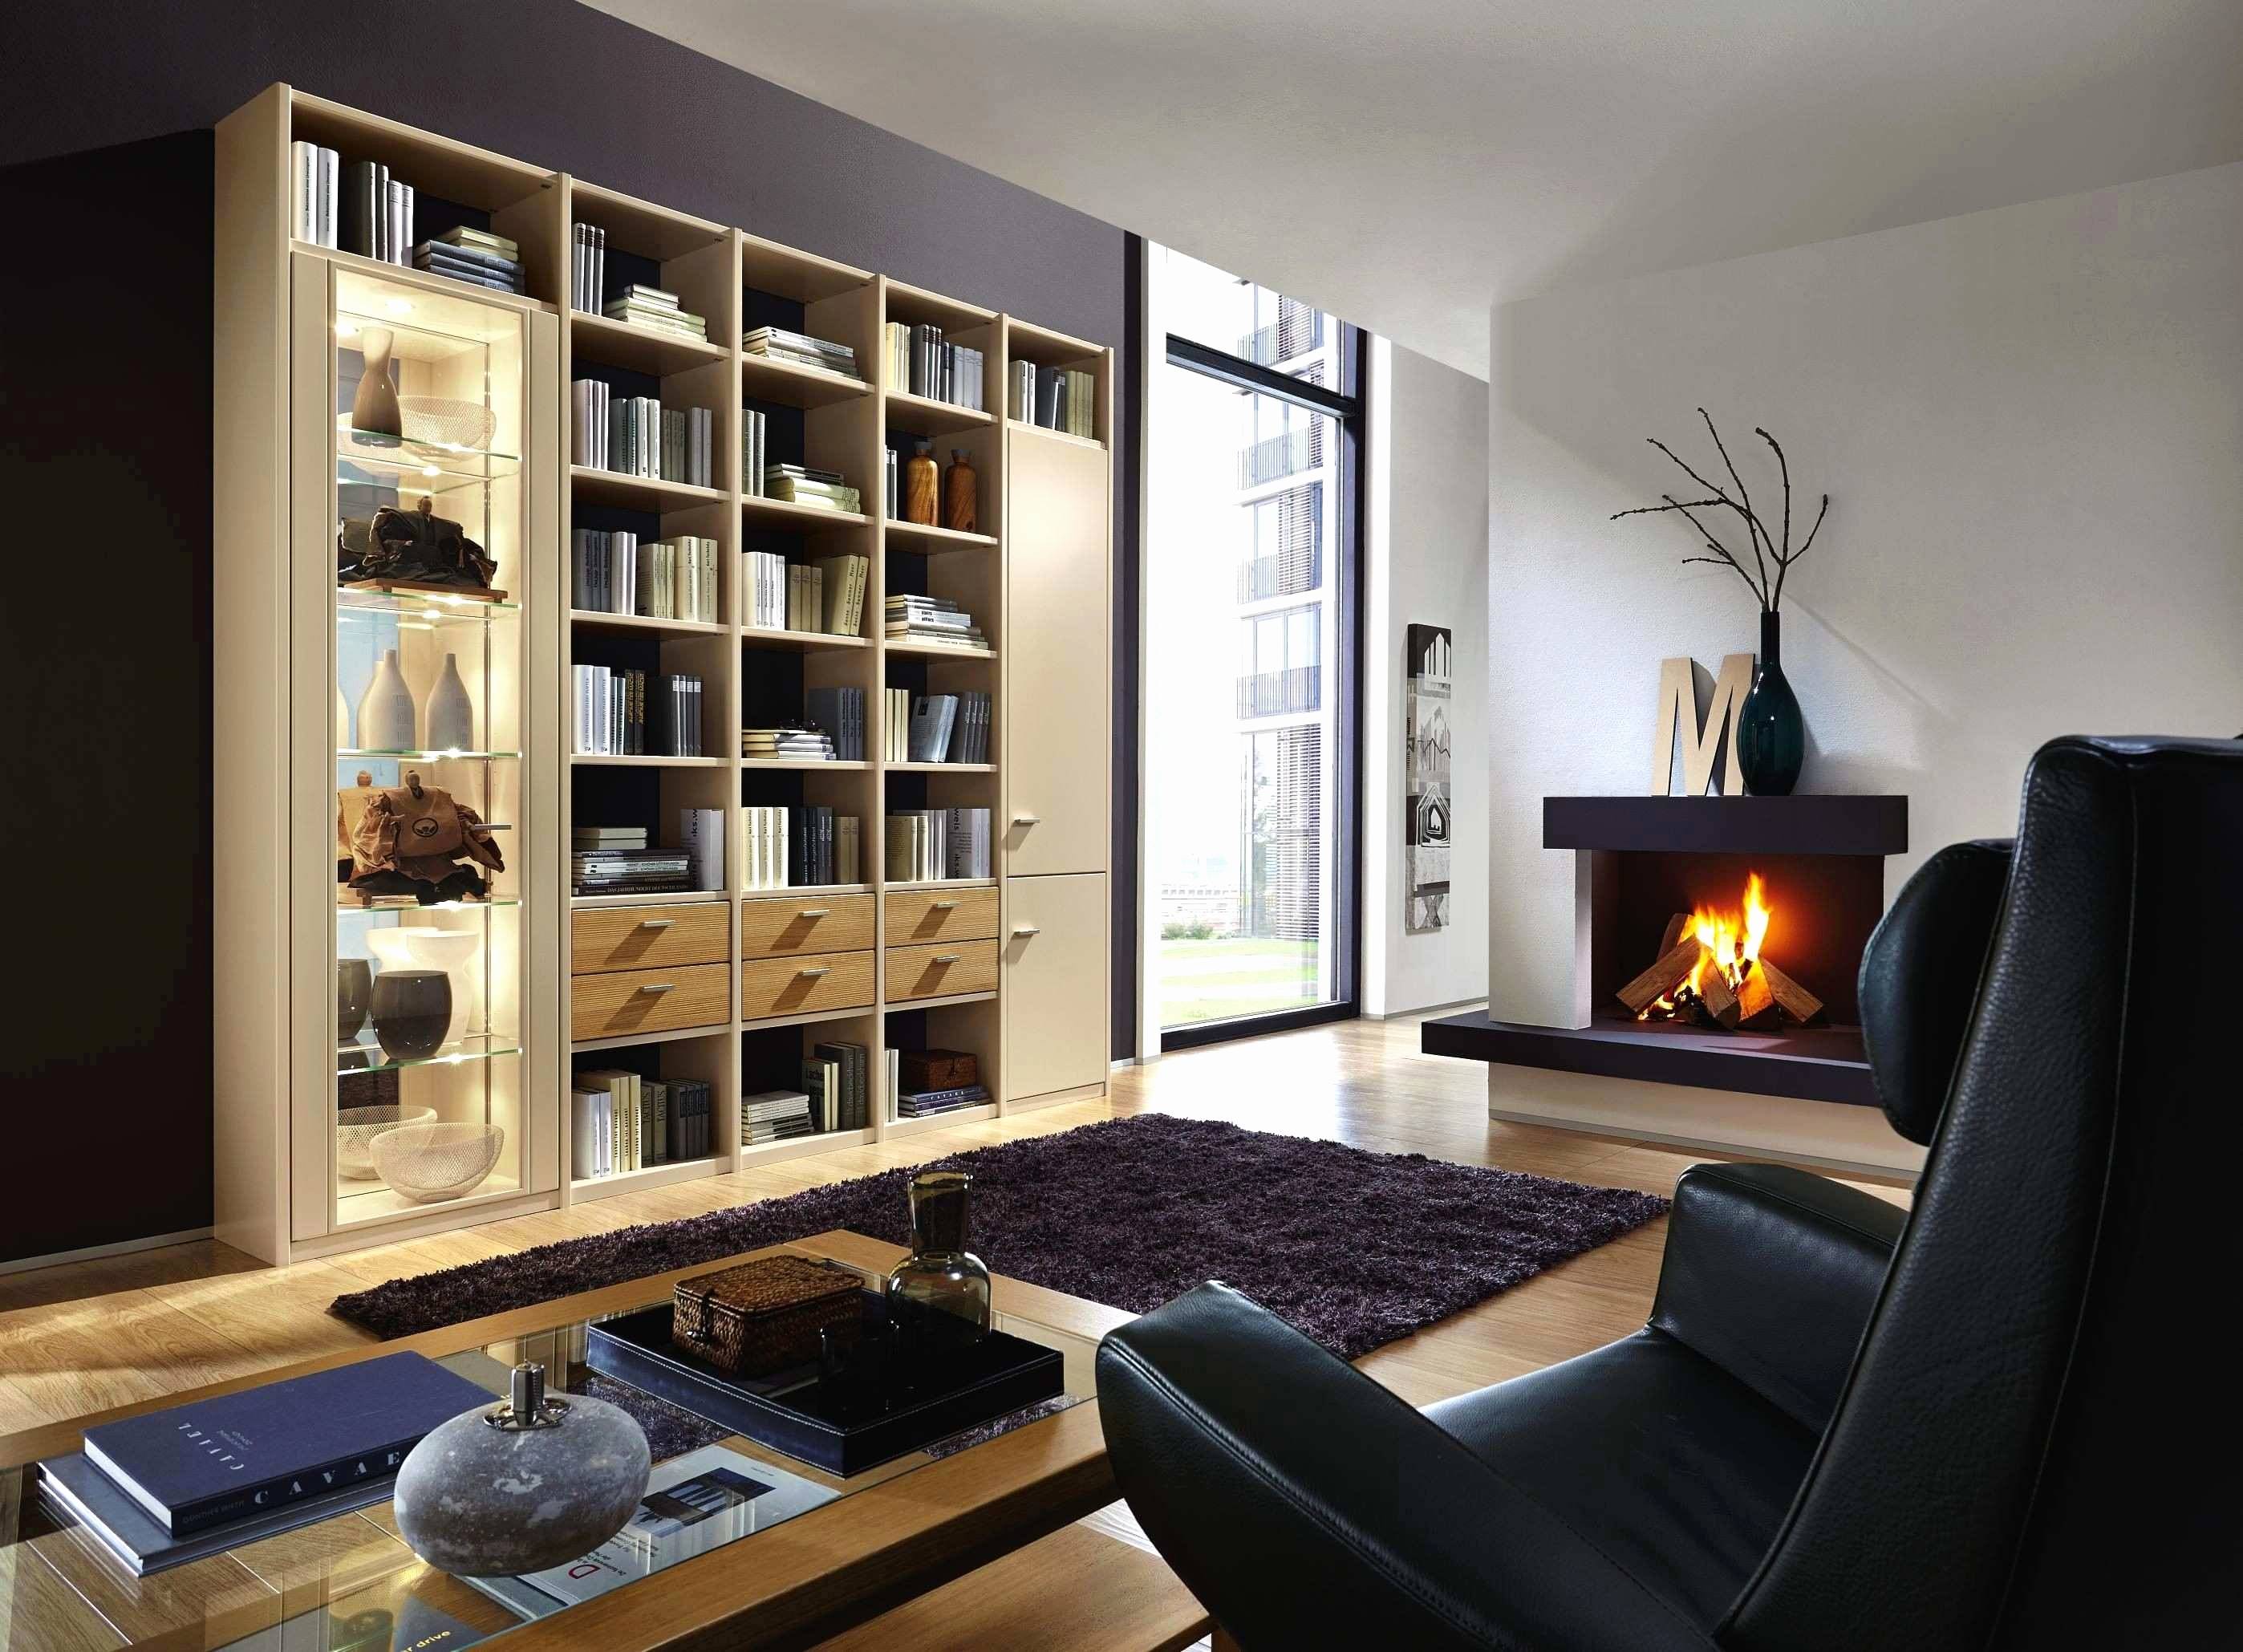 Fireplace without Hearth Fresh Beautiful Wohnzimmerschrank Mit Kamin Concept